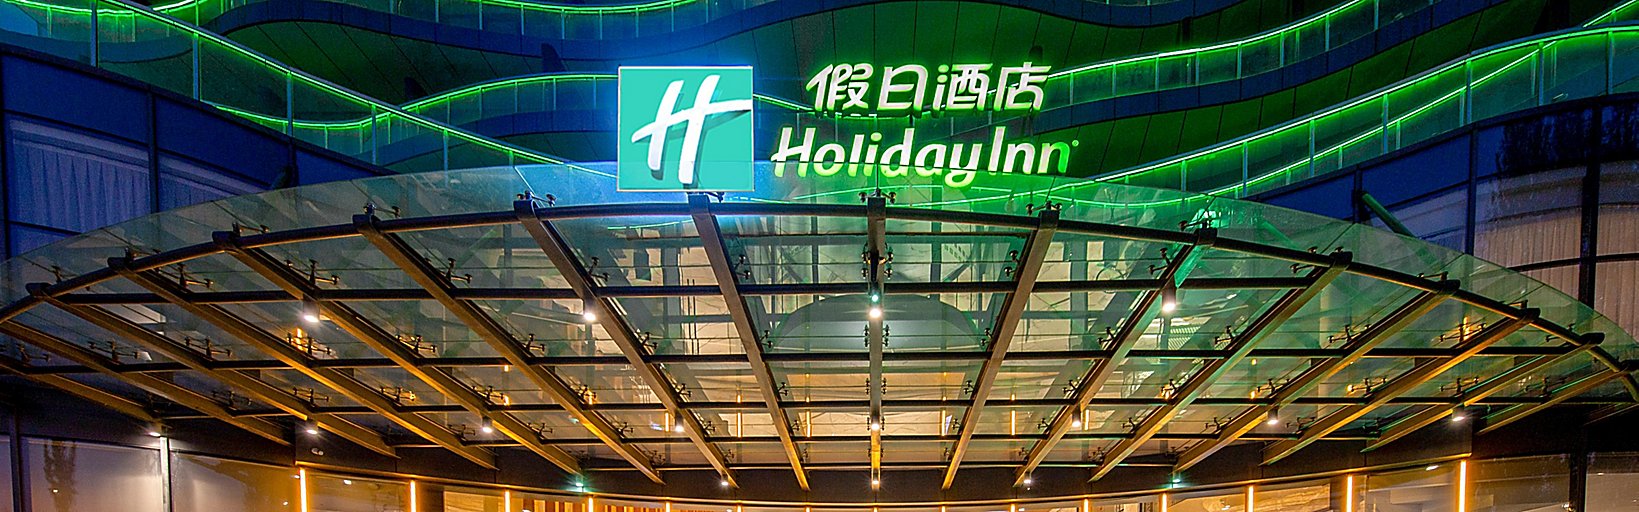 Holiday Inn 南京玄武湖假日酒店洲际旗下酒店